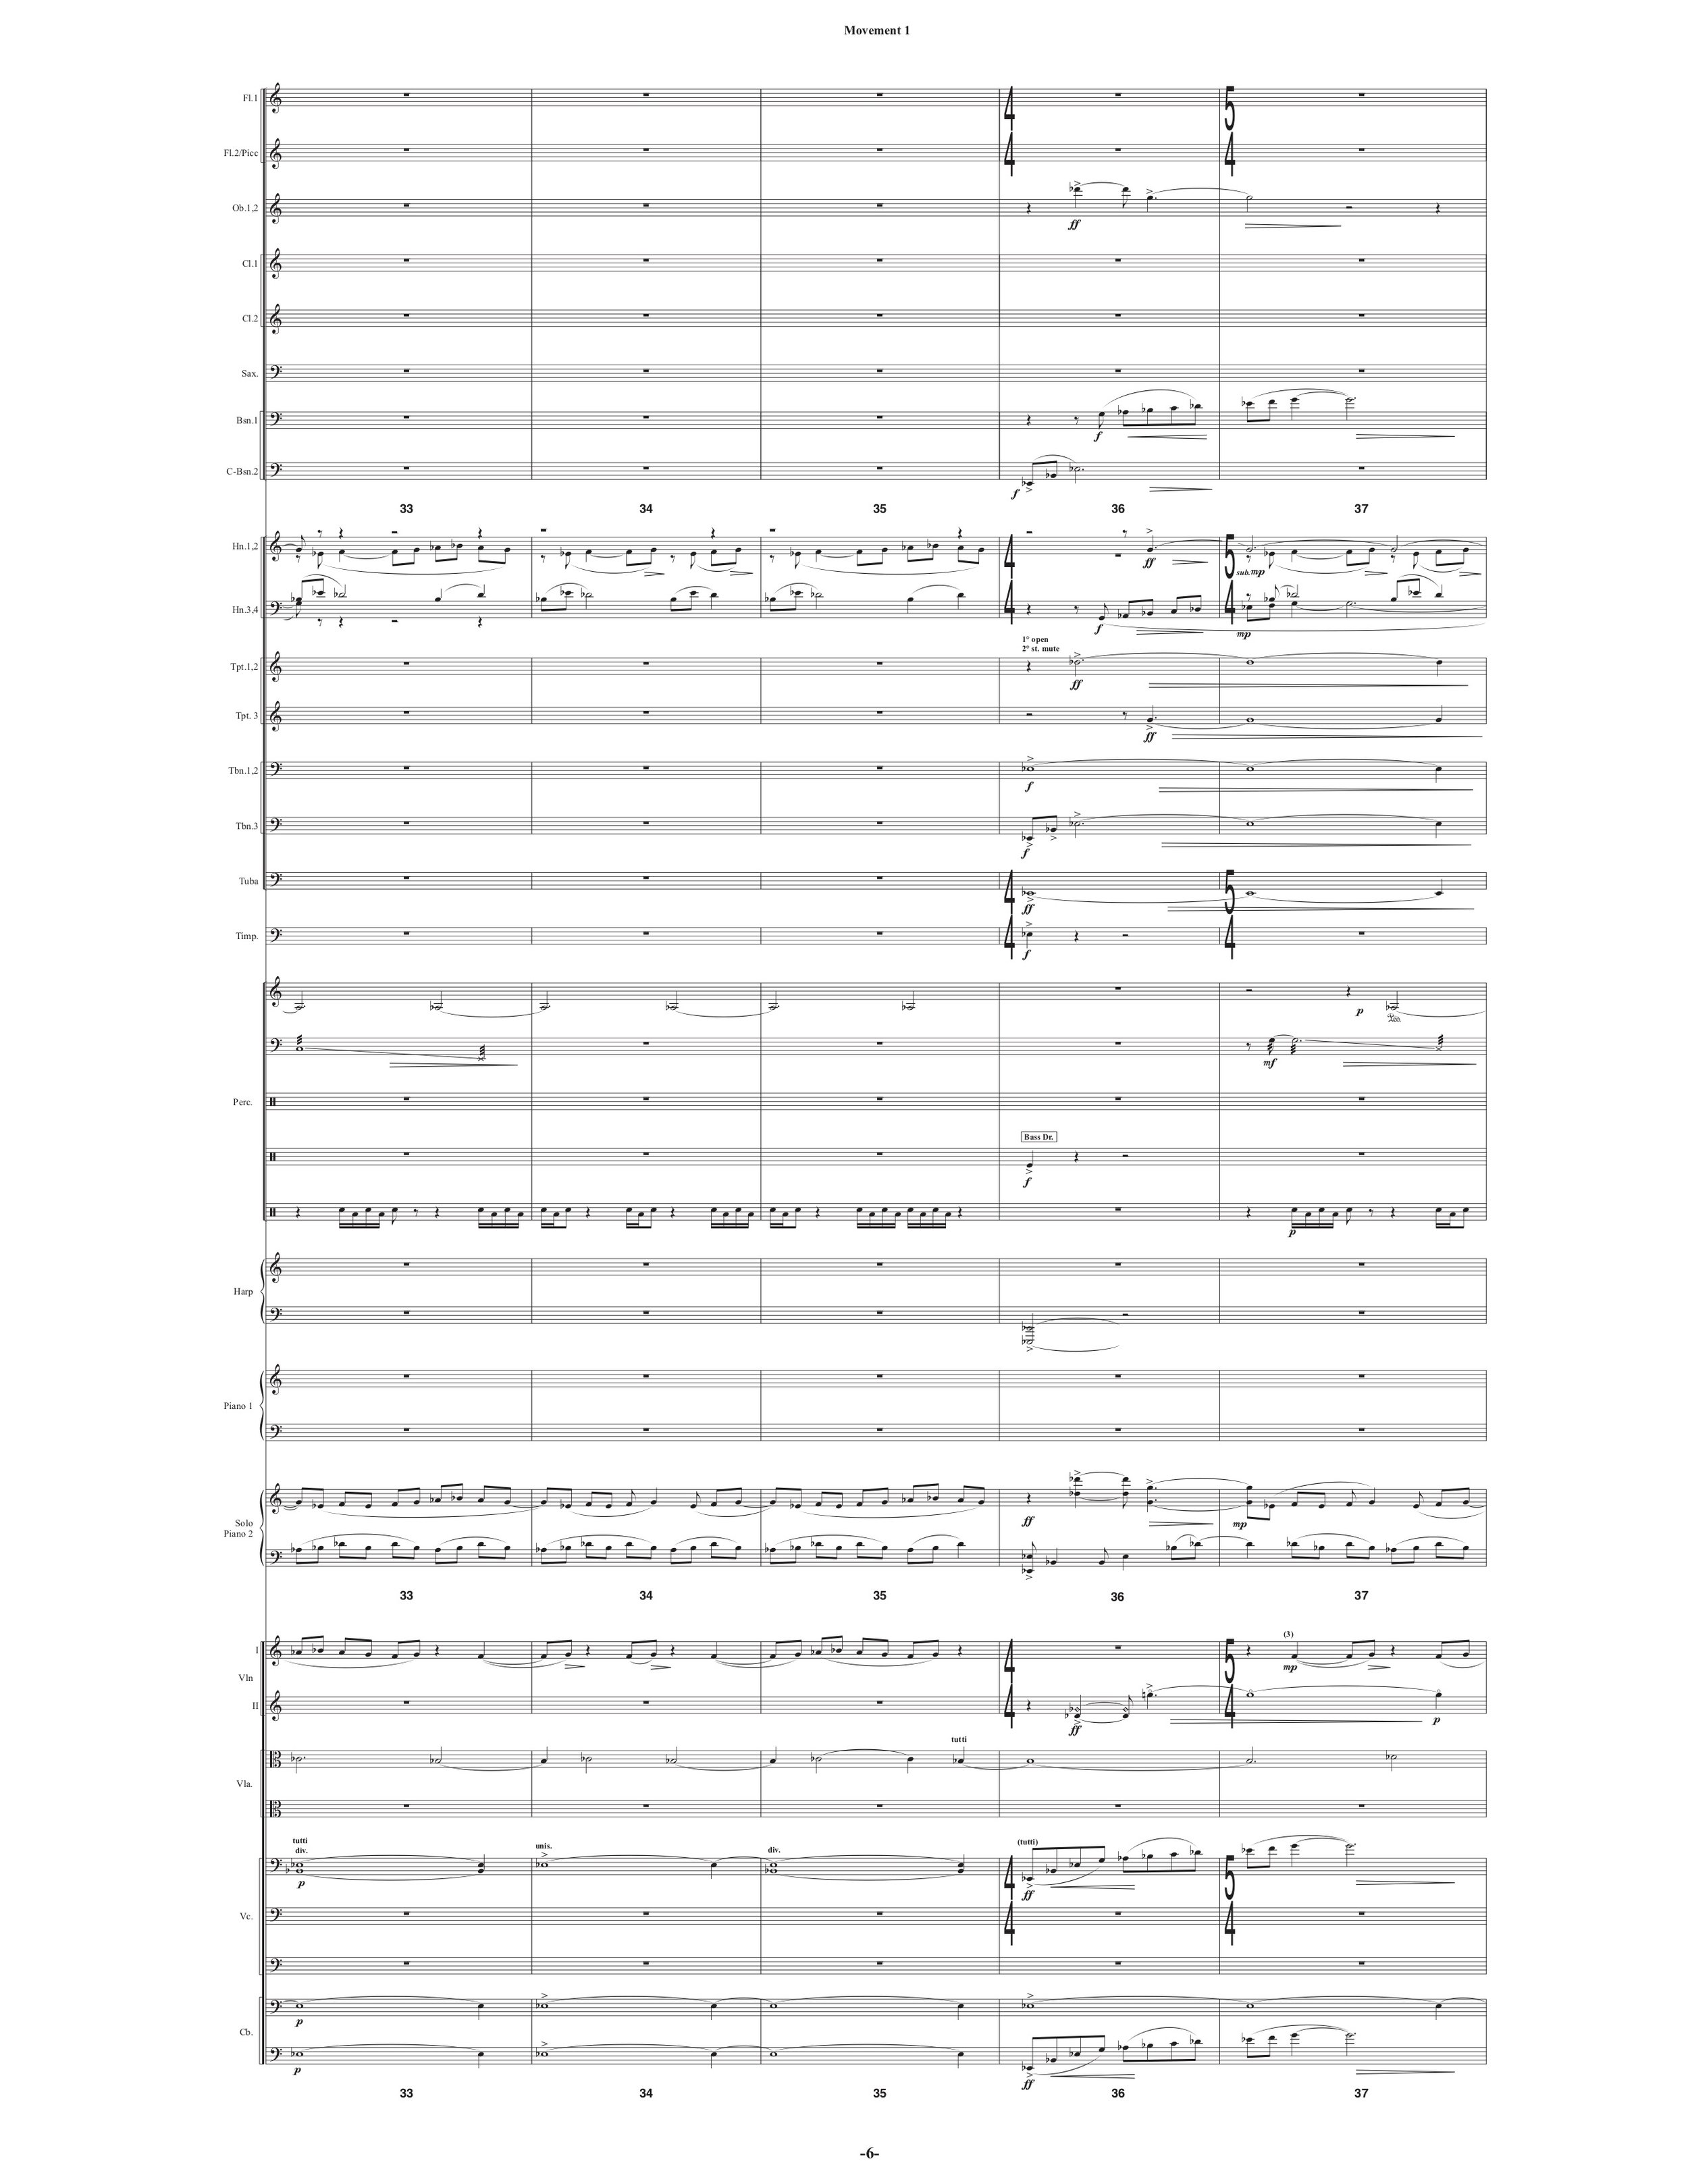 Symphony_Orch & 2 Pianos p11.jpg